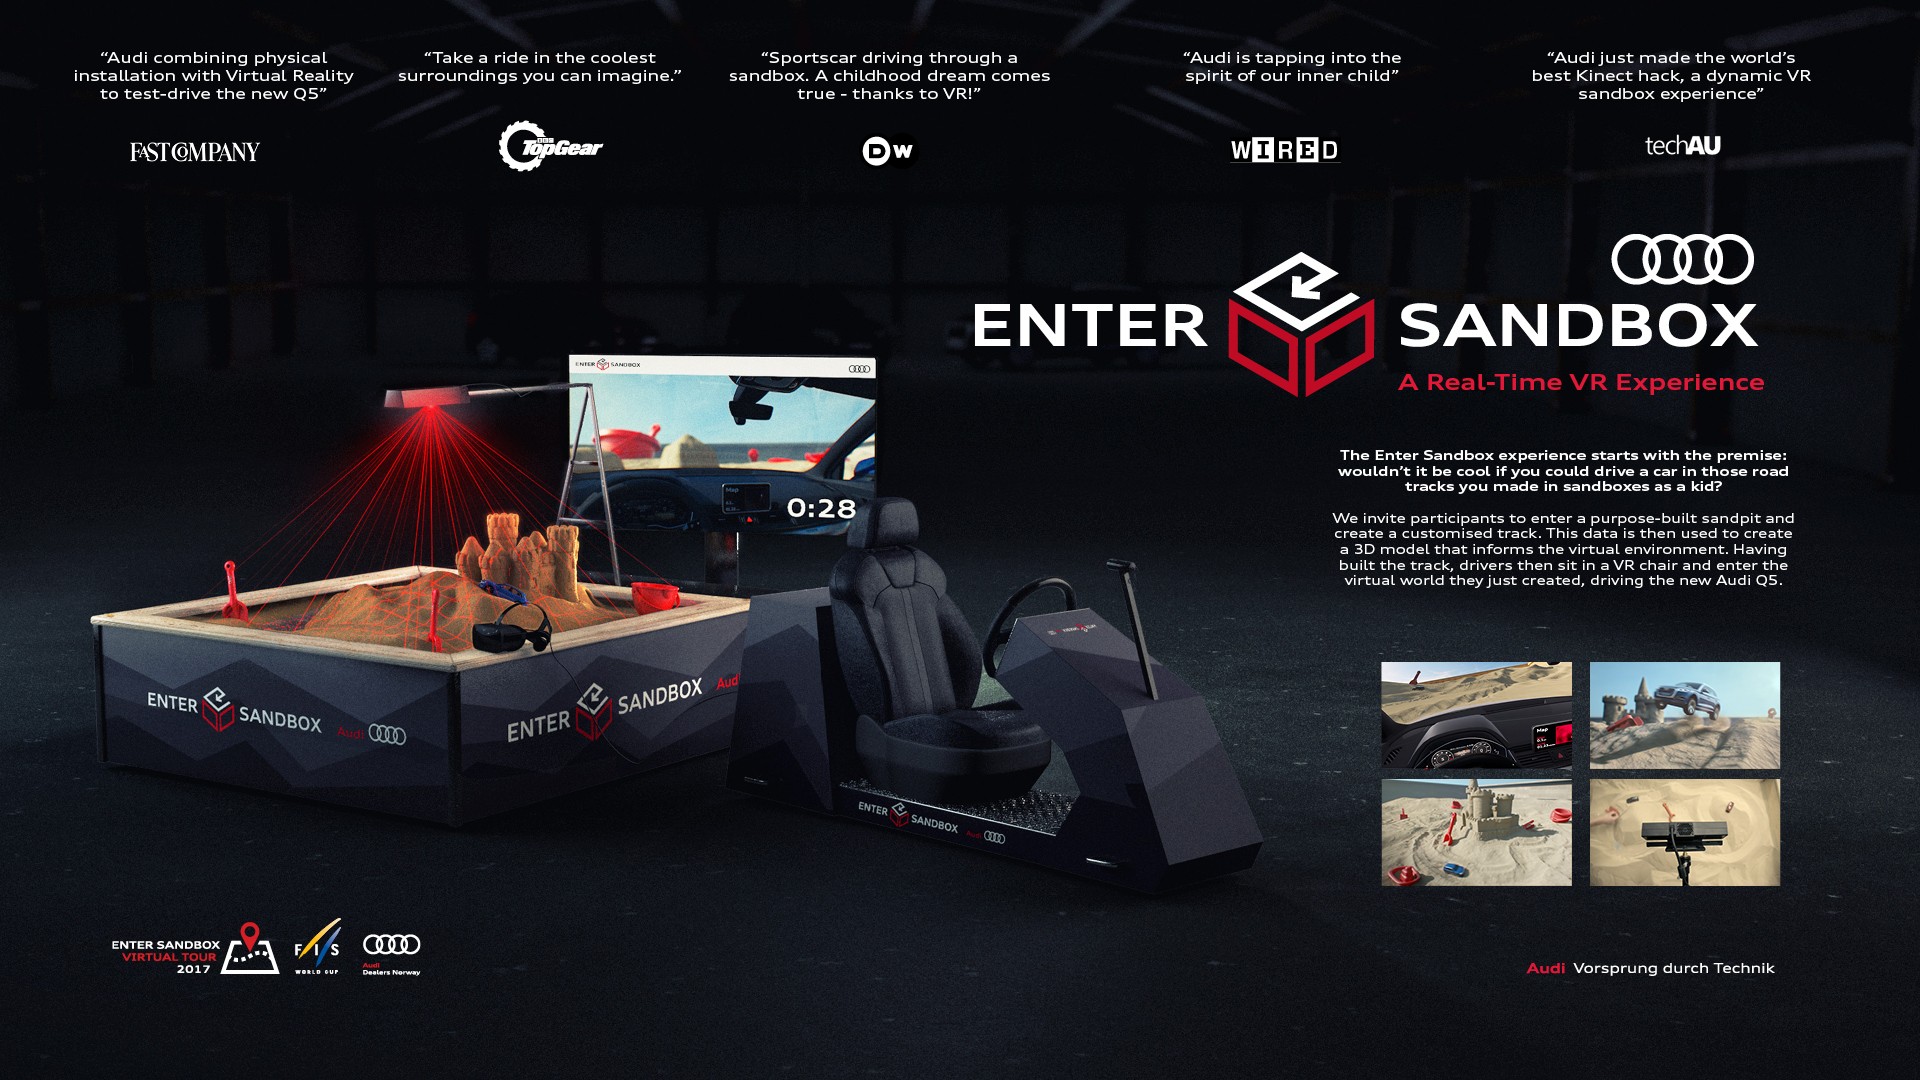 The Audi Sandbox VR Experience